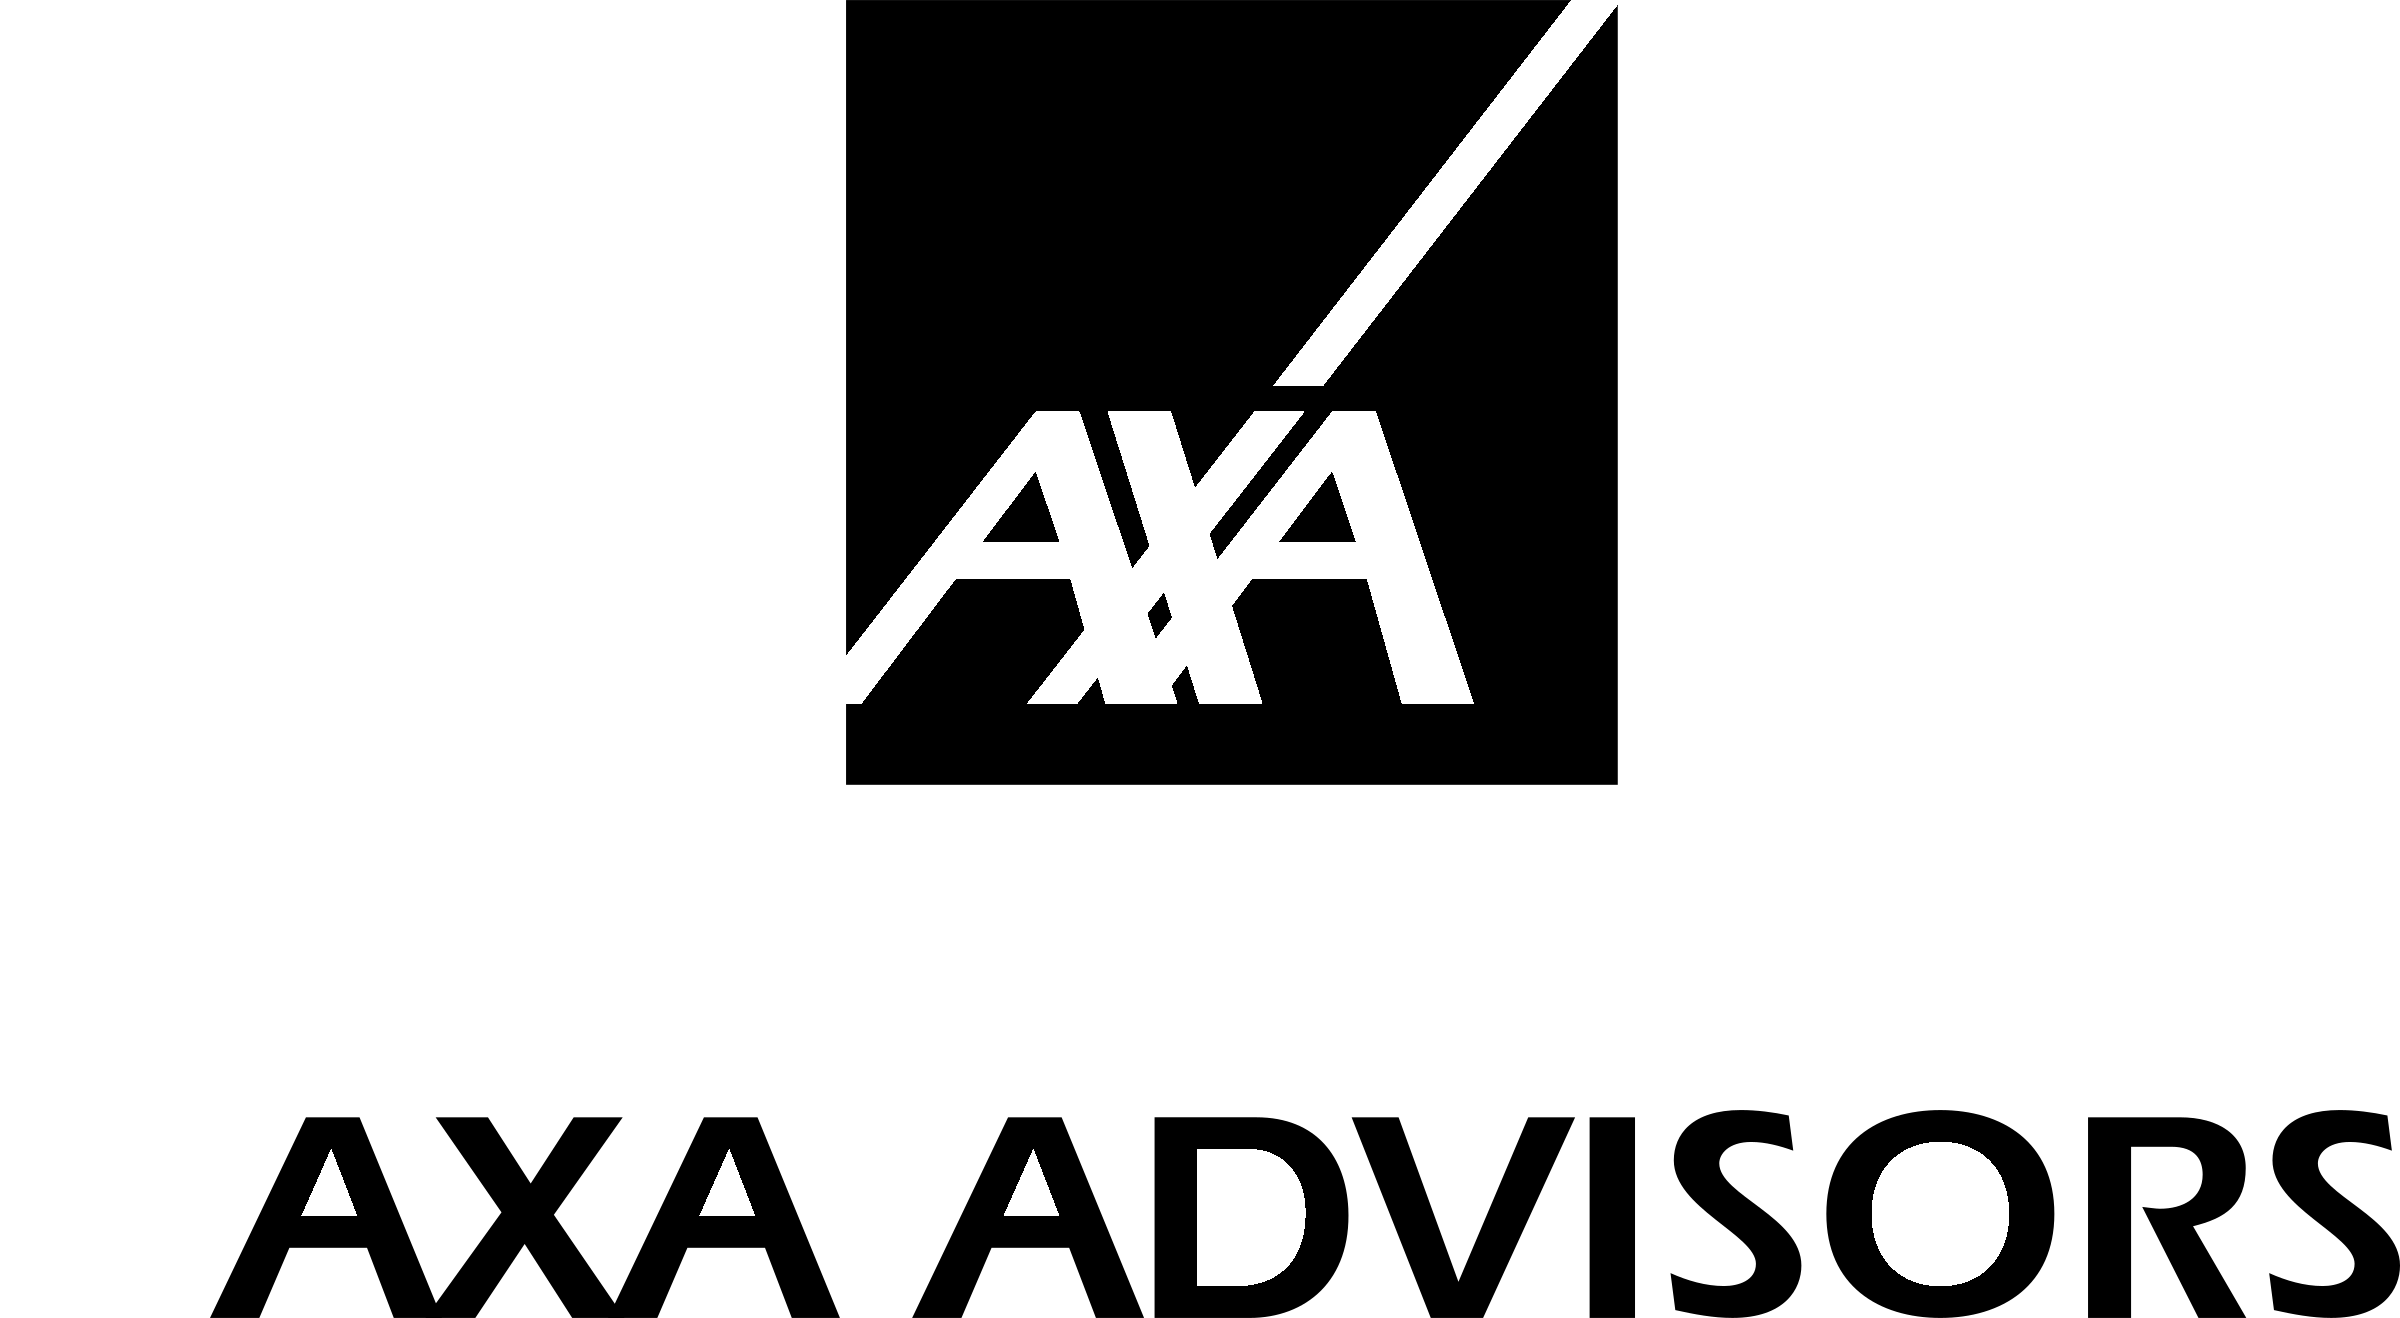 Axa-logo zwart-wit